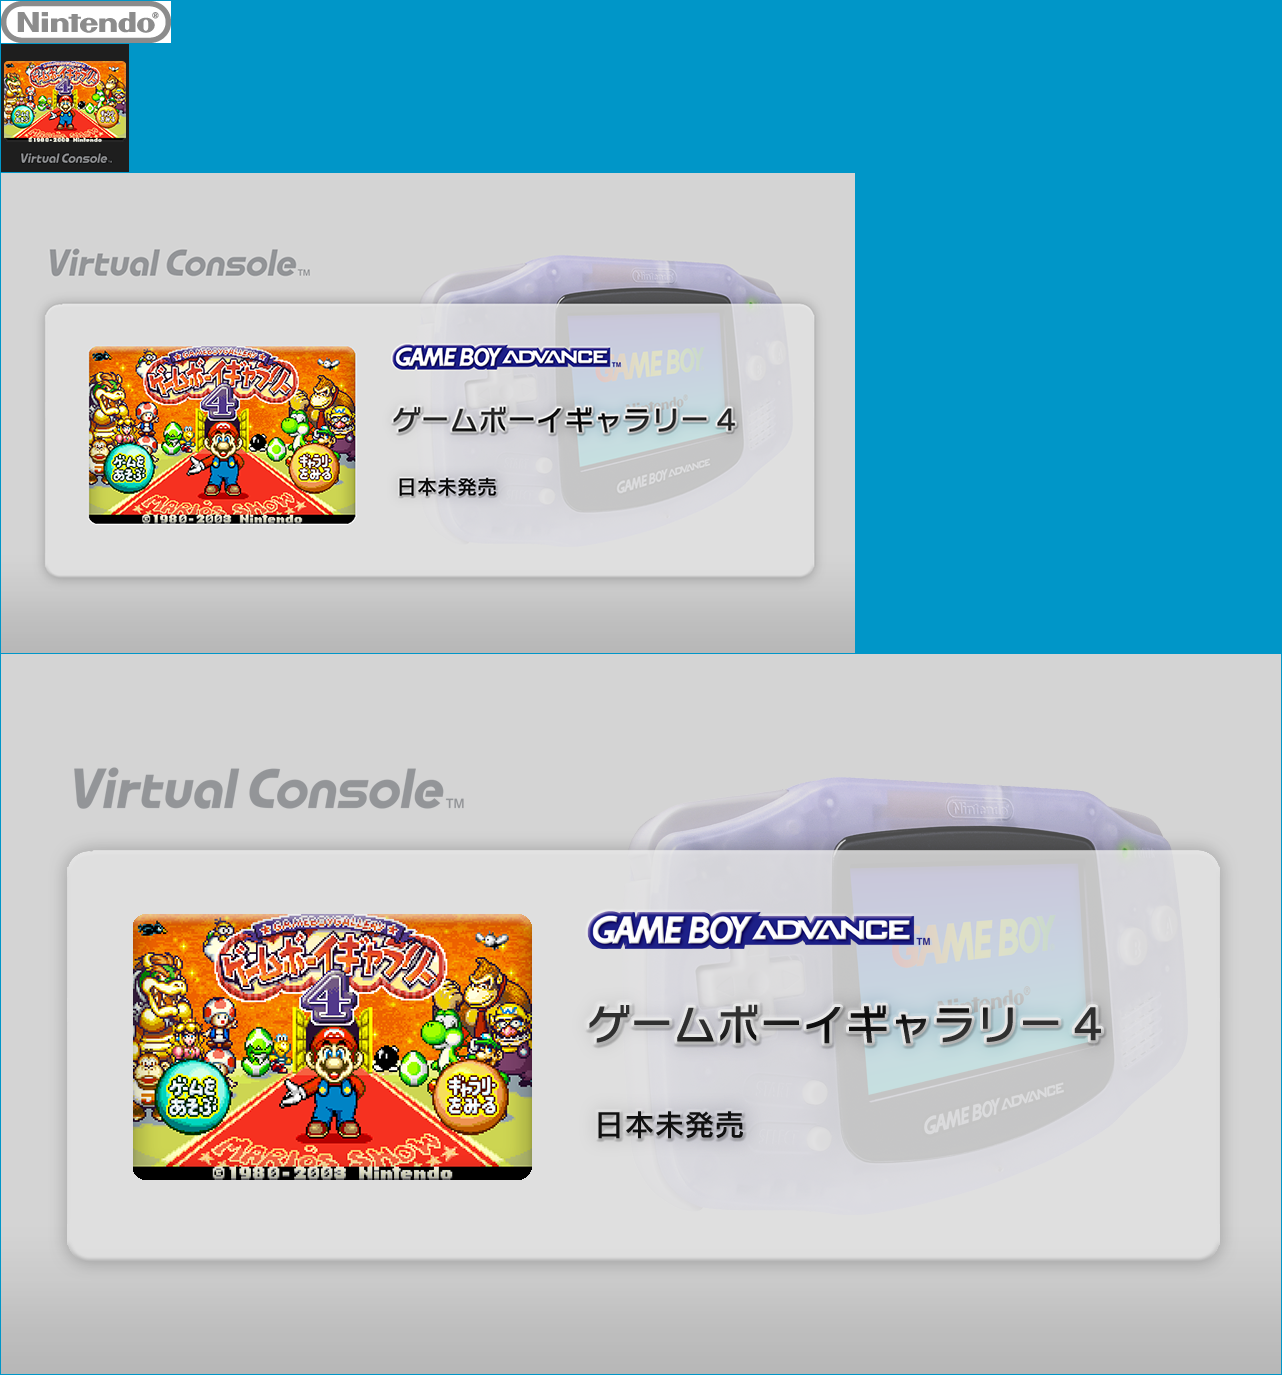 Virtual Console - Game Boy Gallery 4